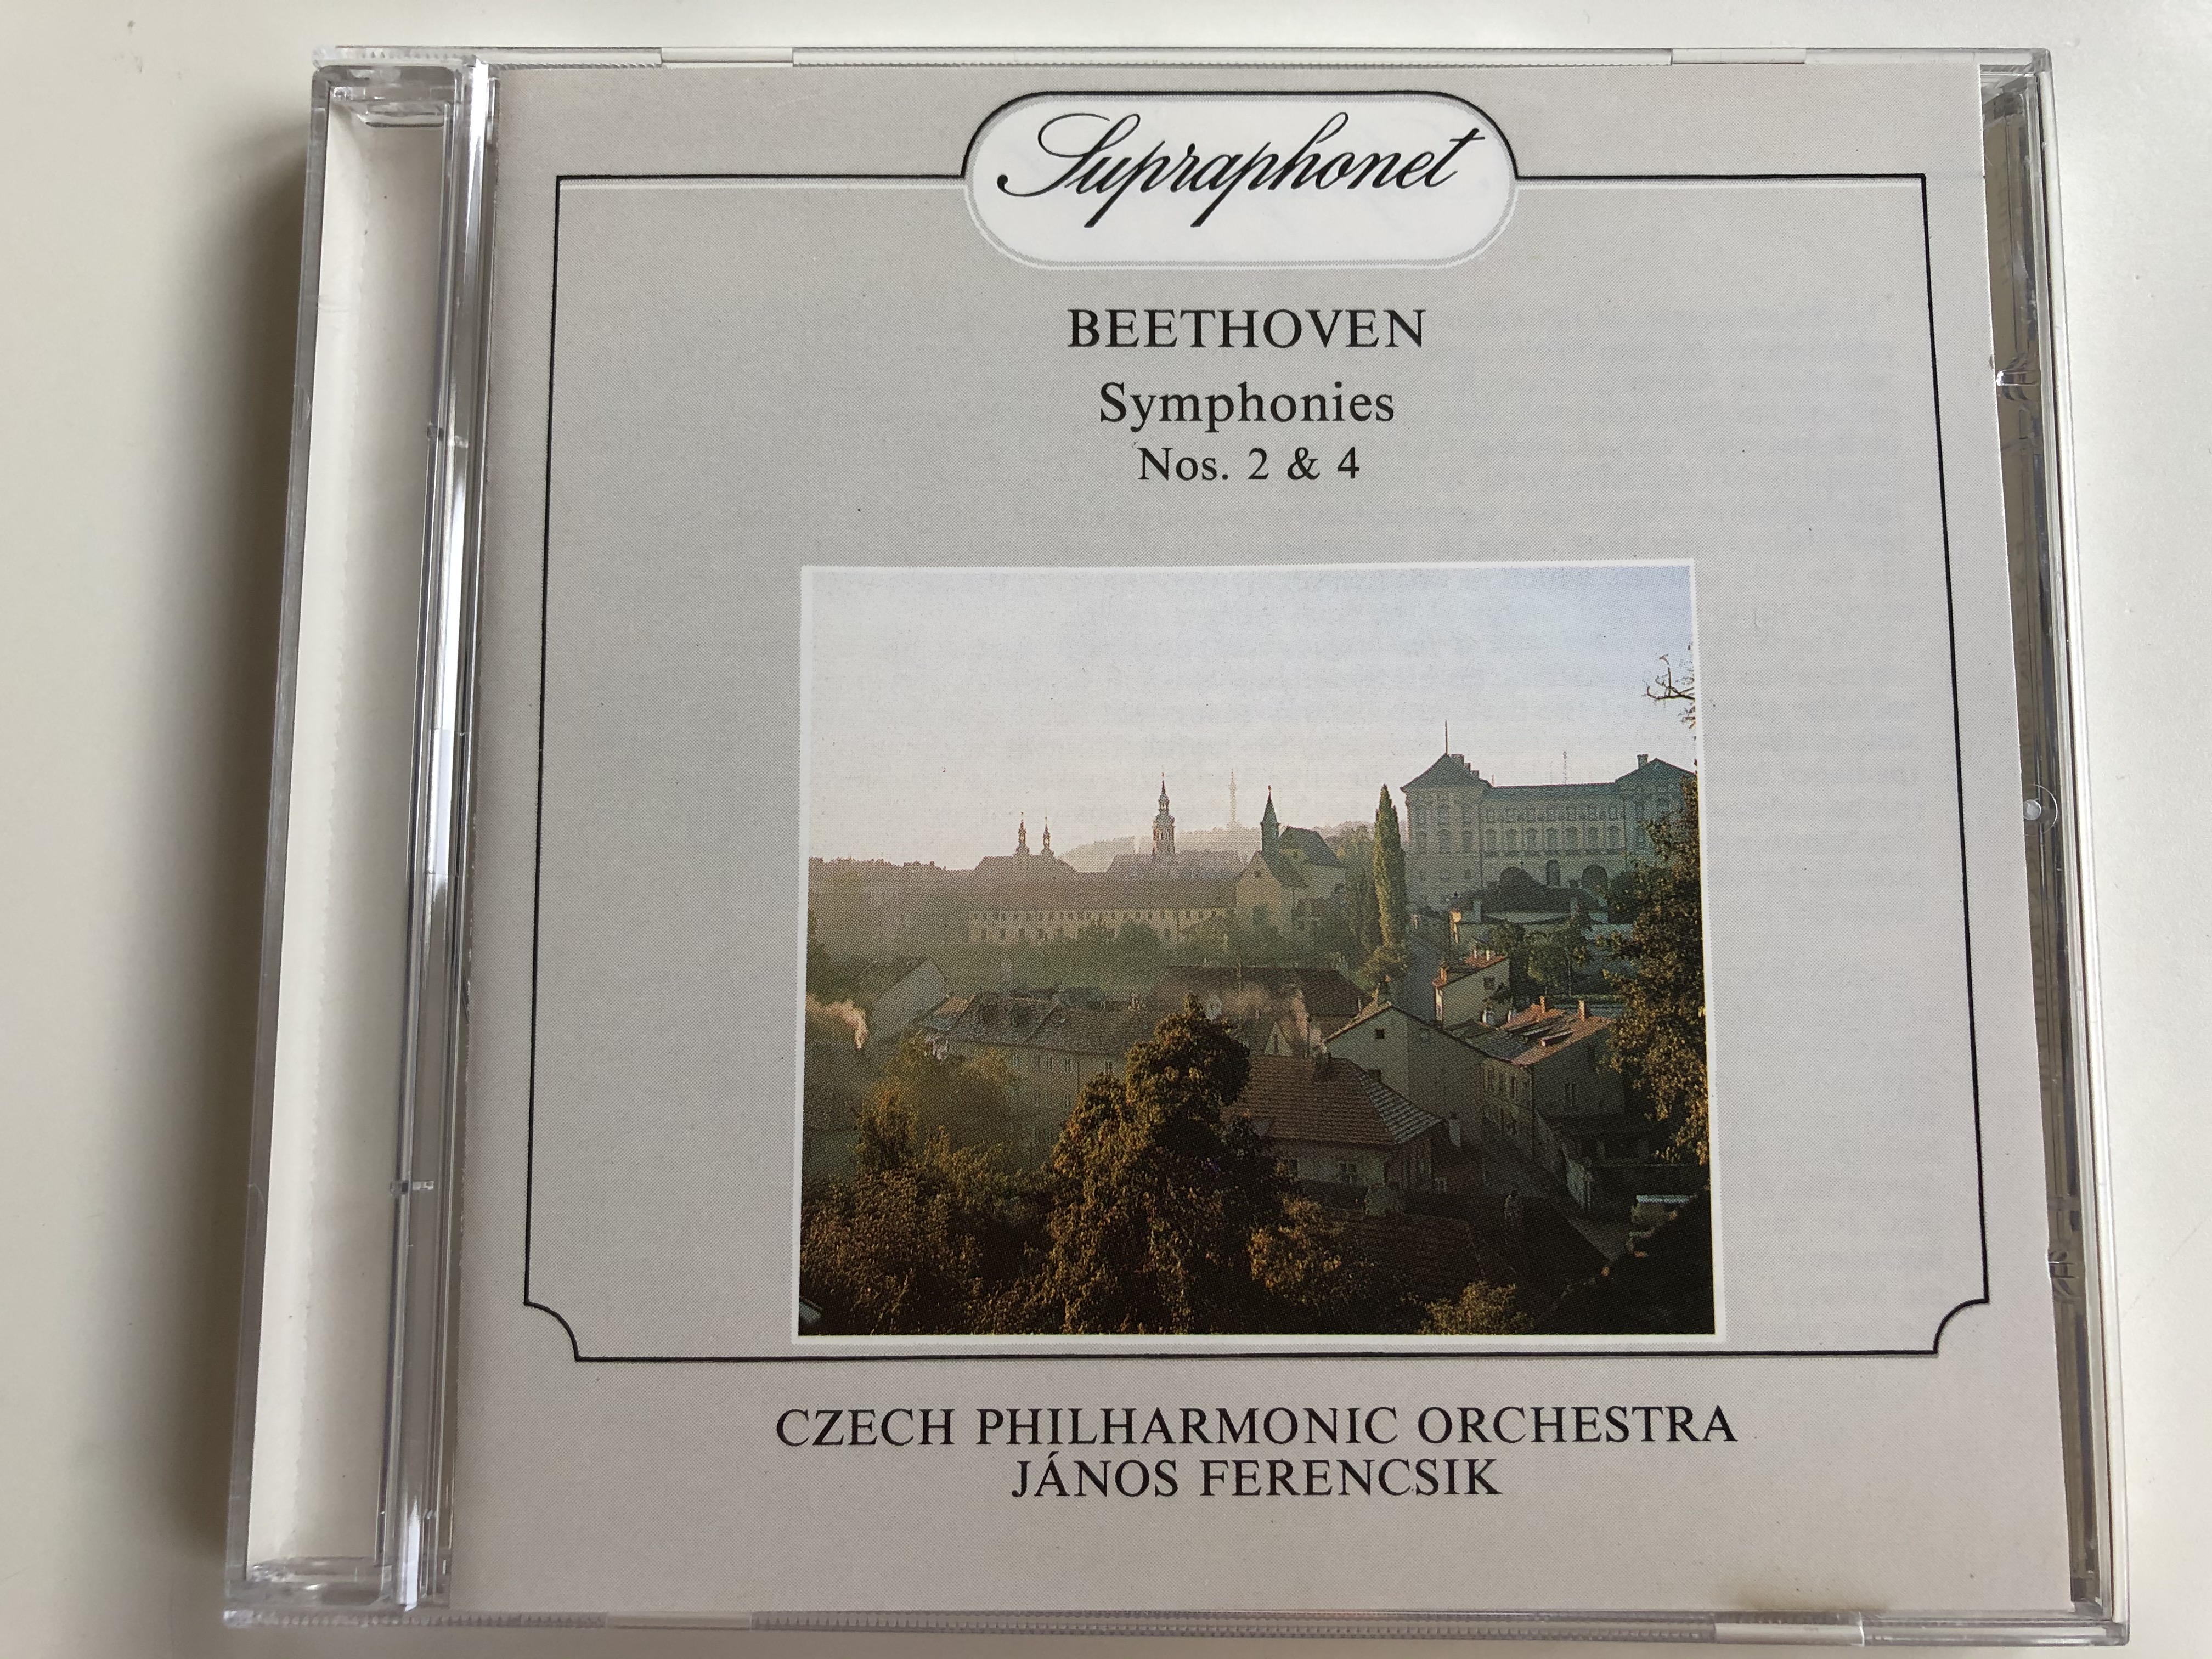 beethoven-symphonies-nos.-2-4-czech-philharmonic-orchestra-j-nos-ferencsik-supraphon-audio-cd-1989-11-1104-2-011-1-.jpg